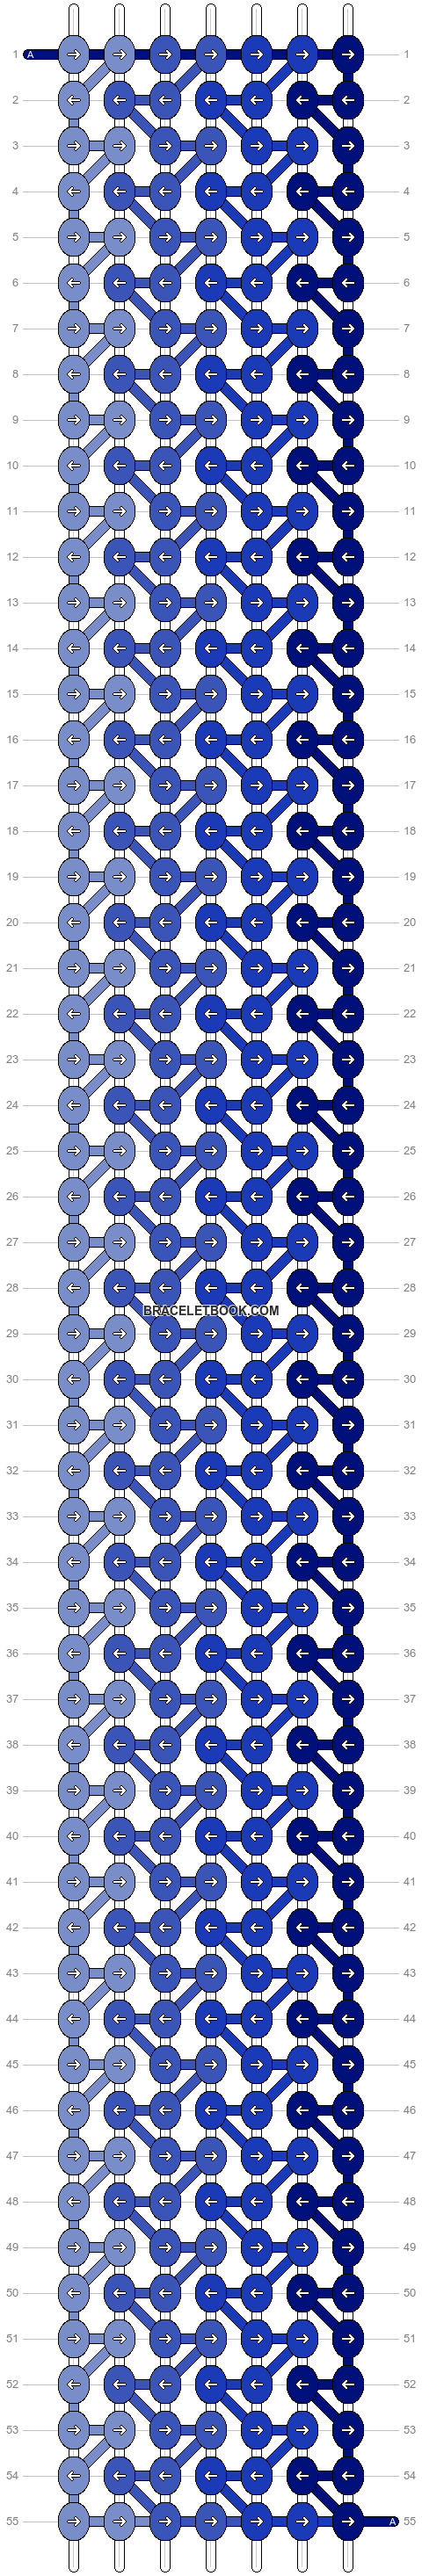 Alpha pattern #15230 variation #49195 pattern